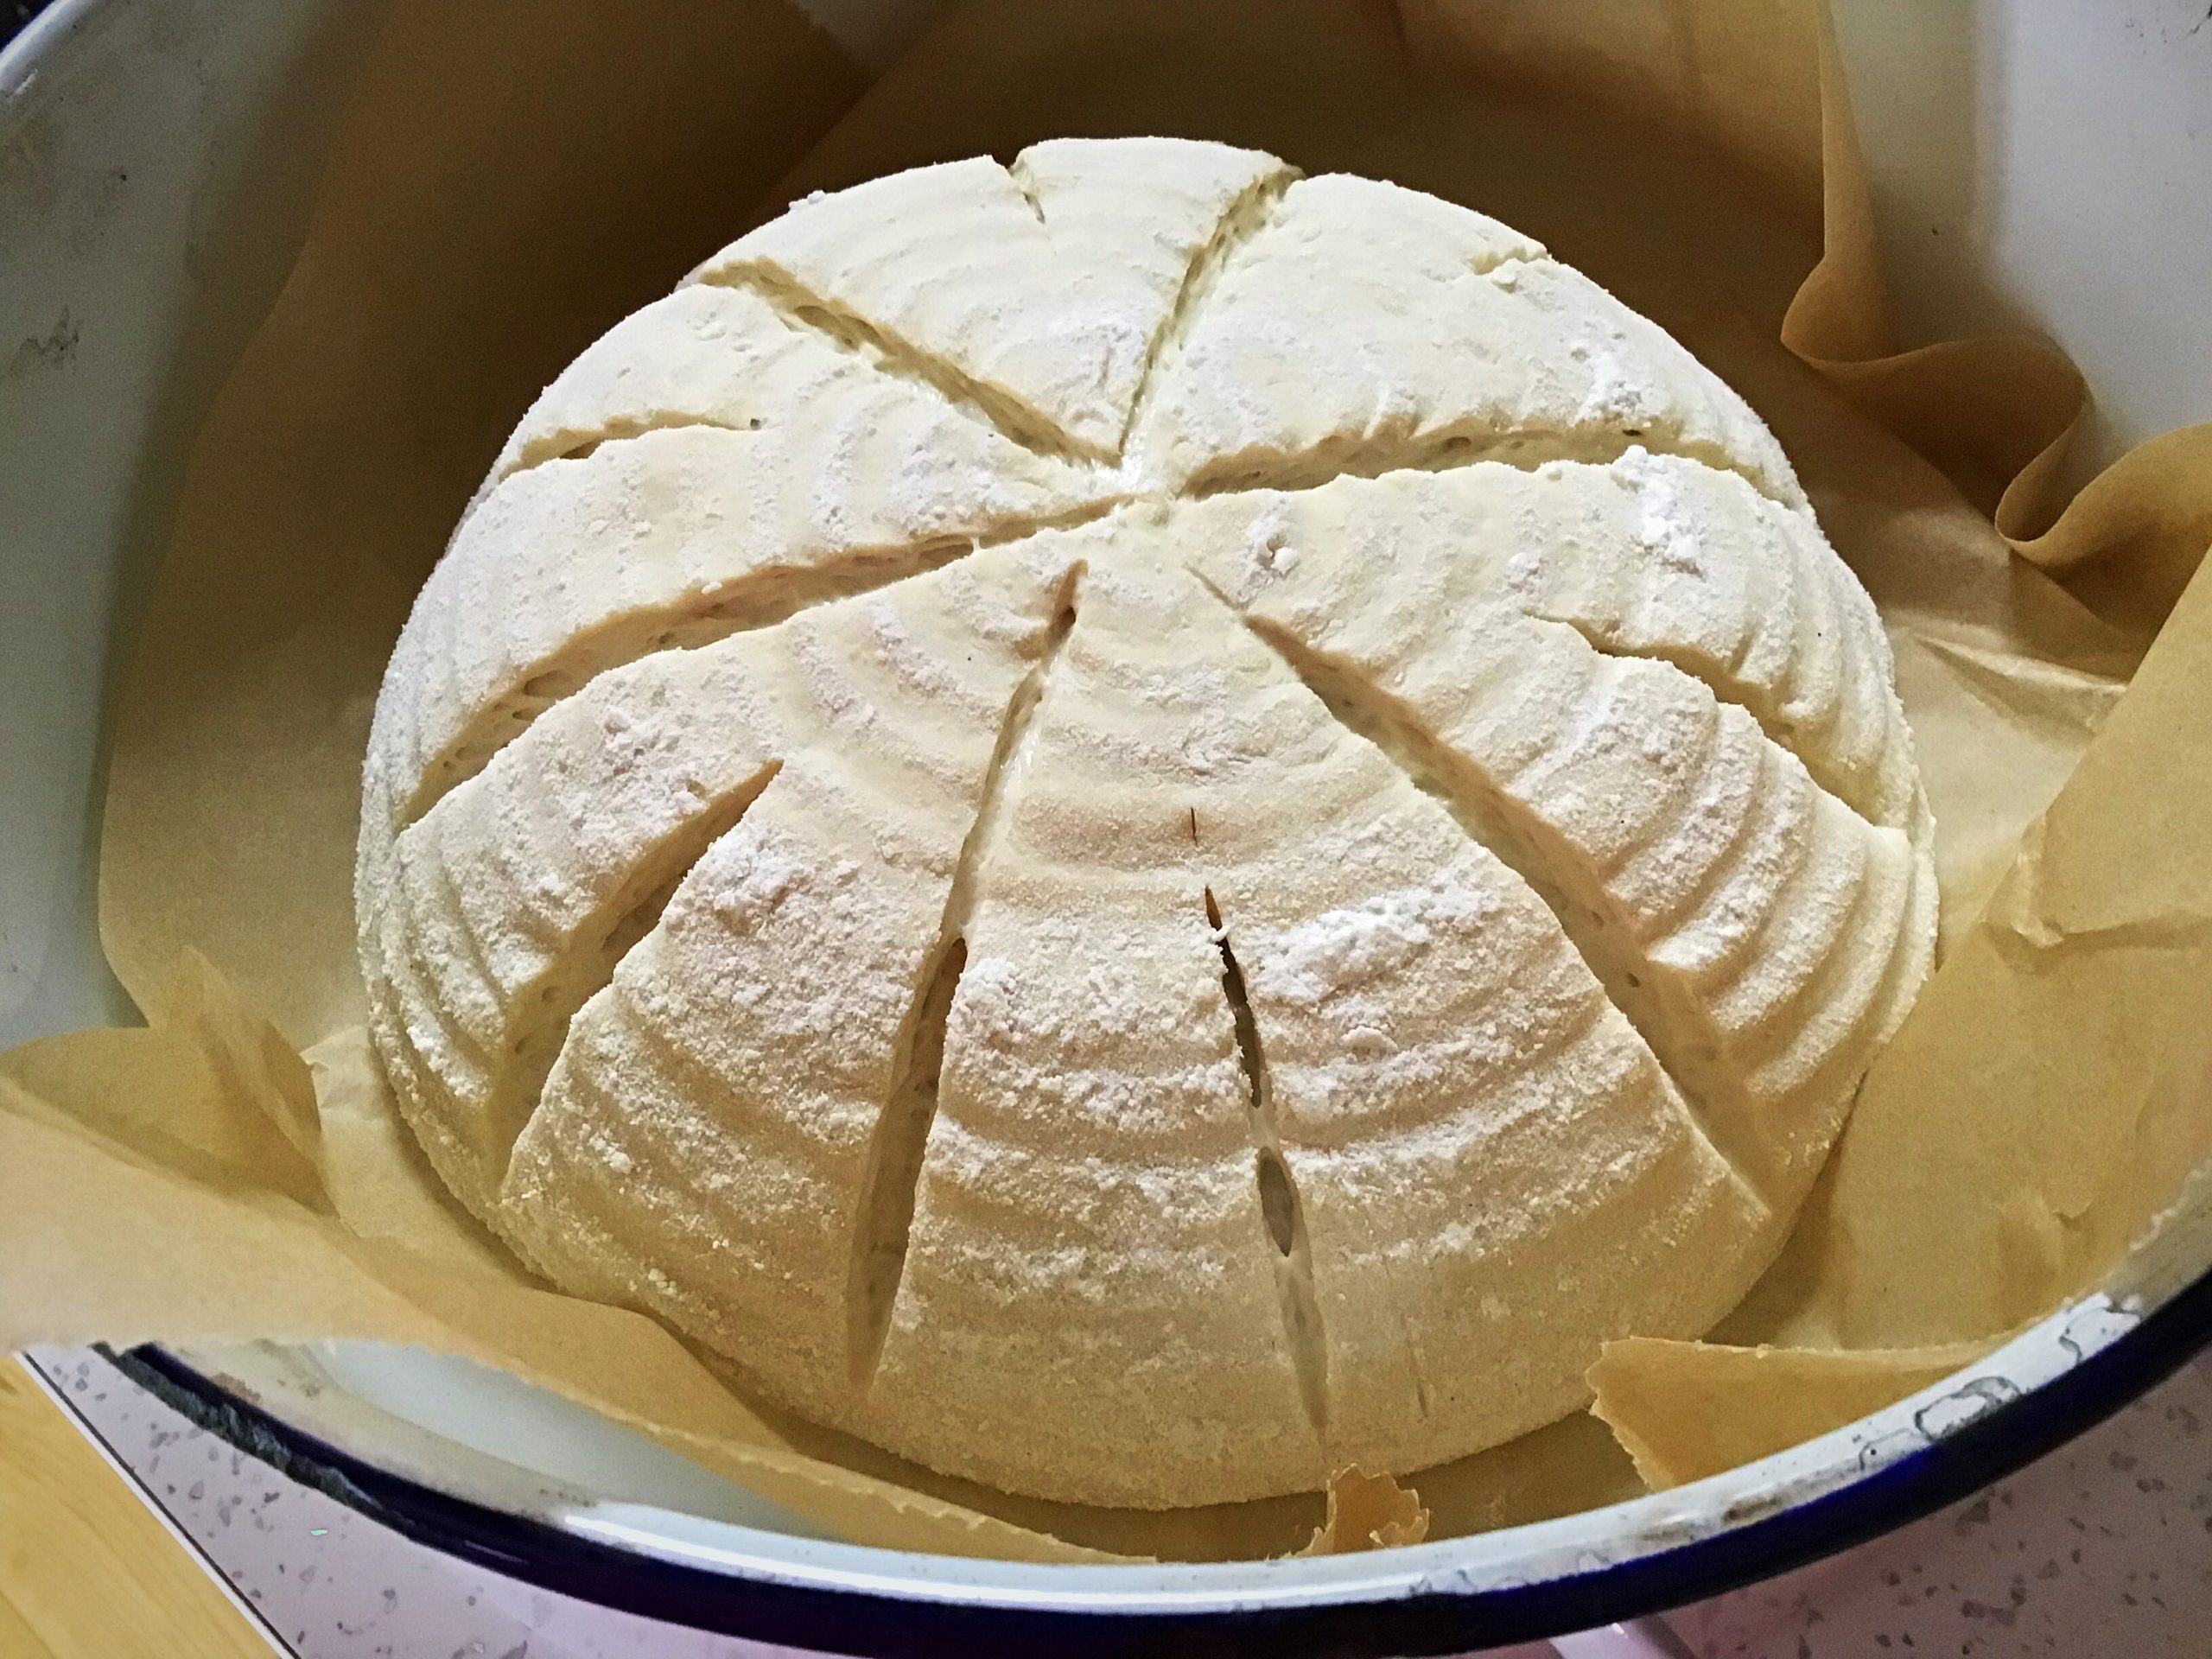 How to score bread dough